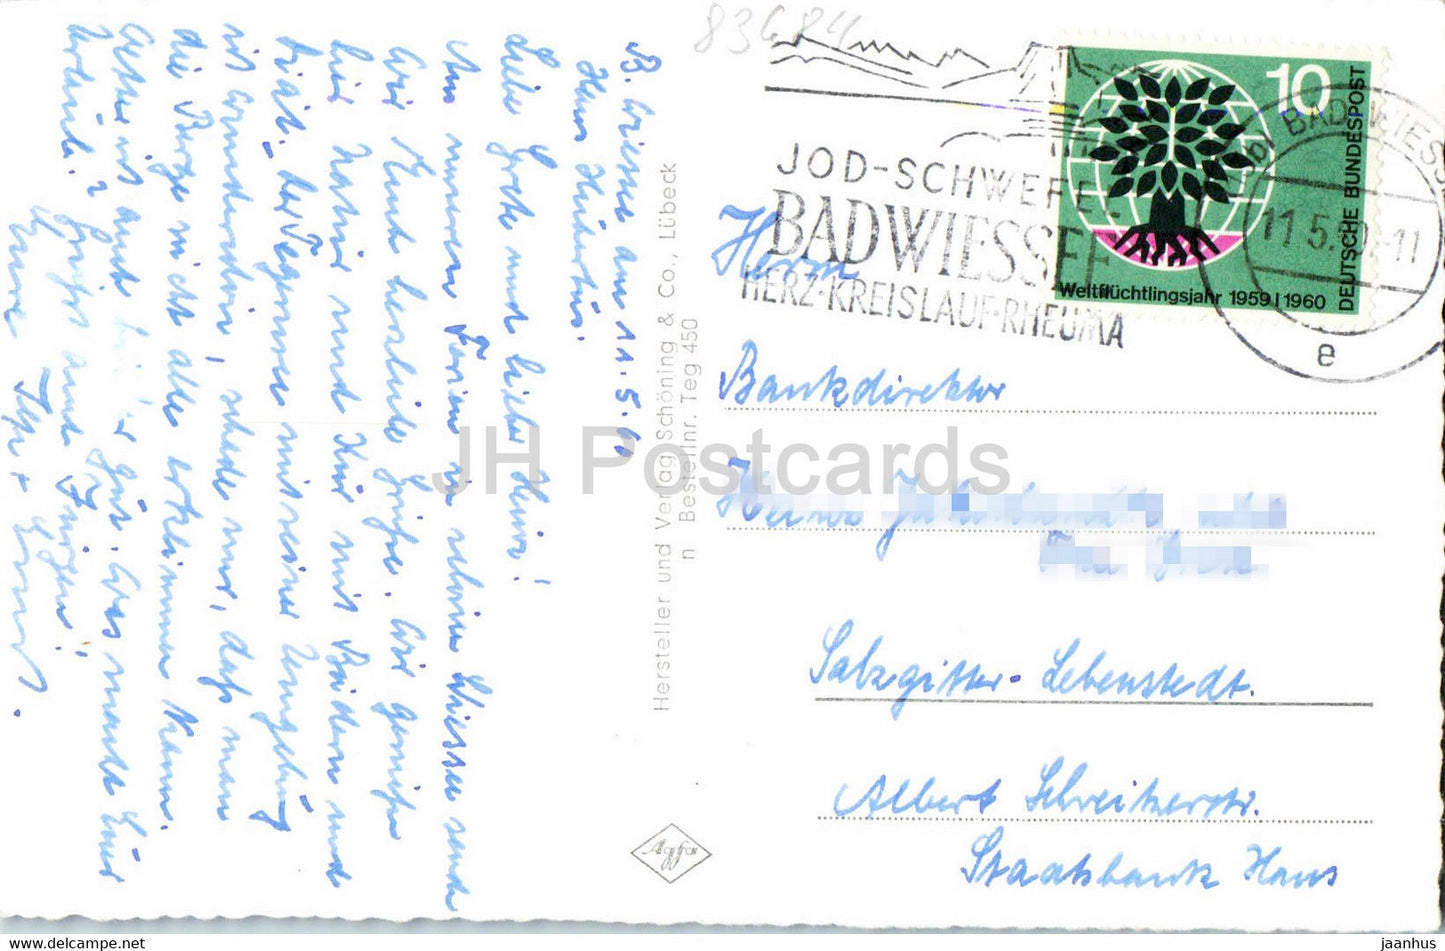 Tegernsee - Blick auf Bad Wiessee - Rottach Egern und Wallberg 1723 m - old postcard - 1960 - Germany - used